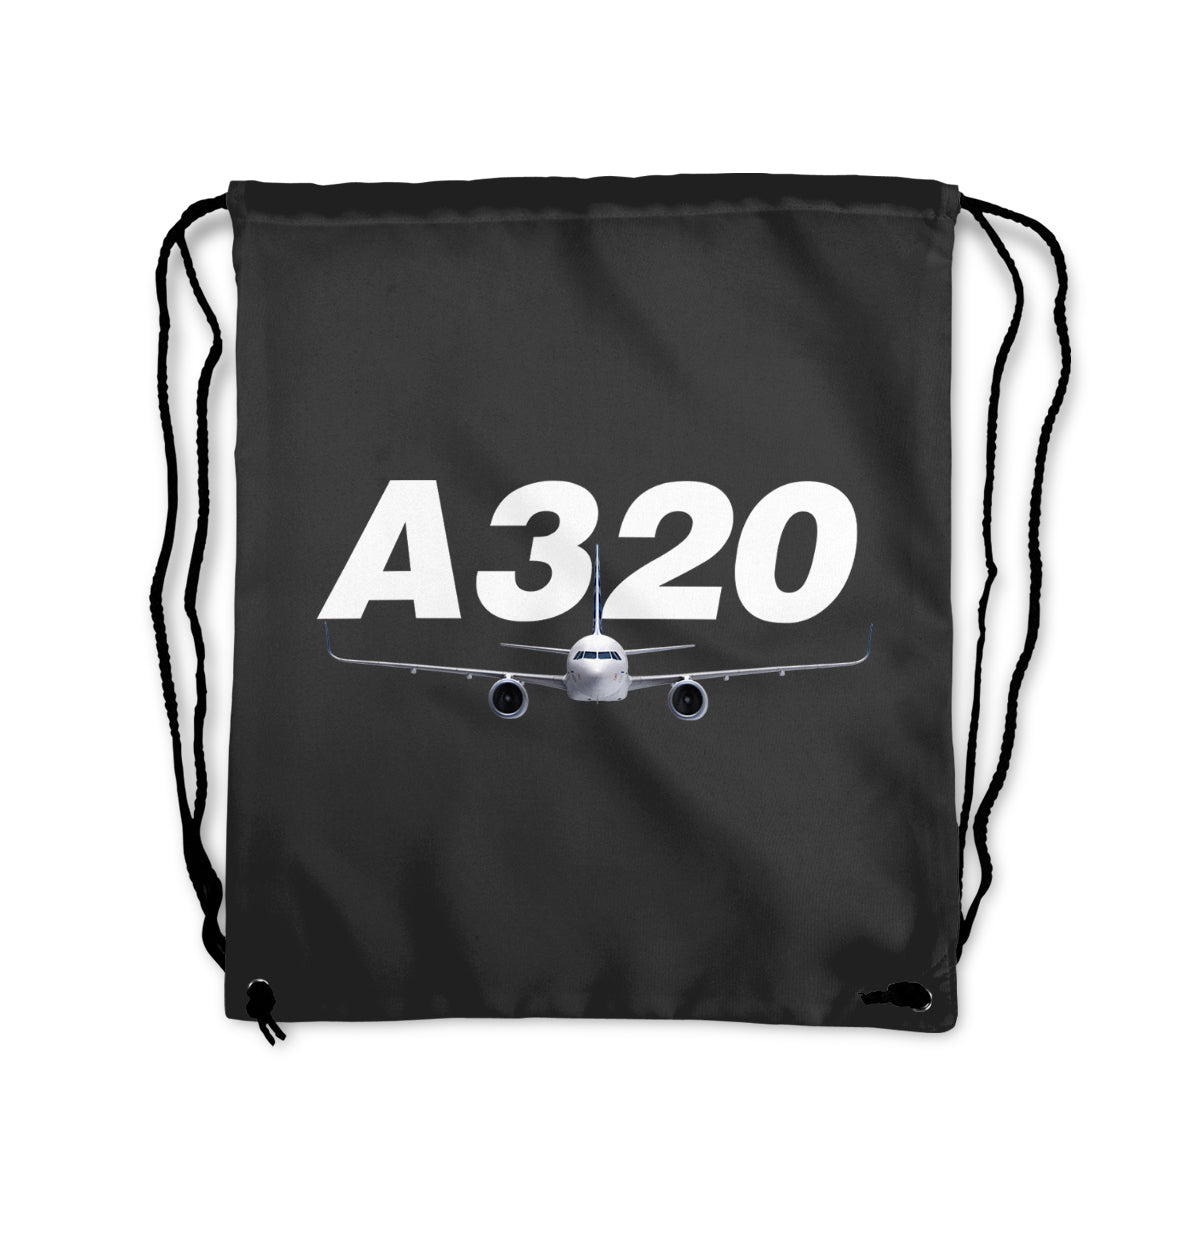 Super Airbus A320 Designed Drawstring Bags